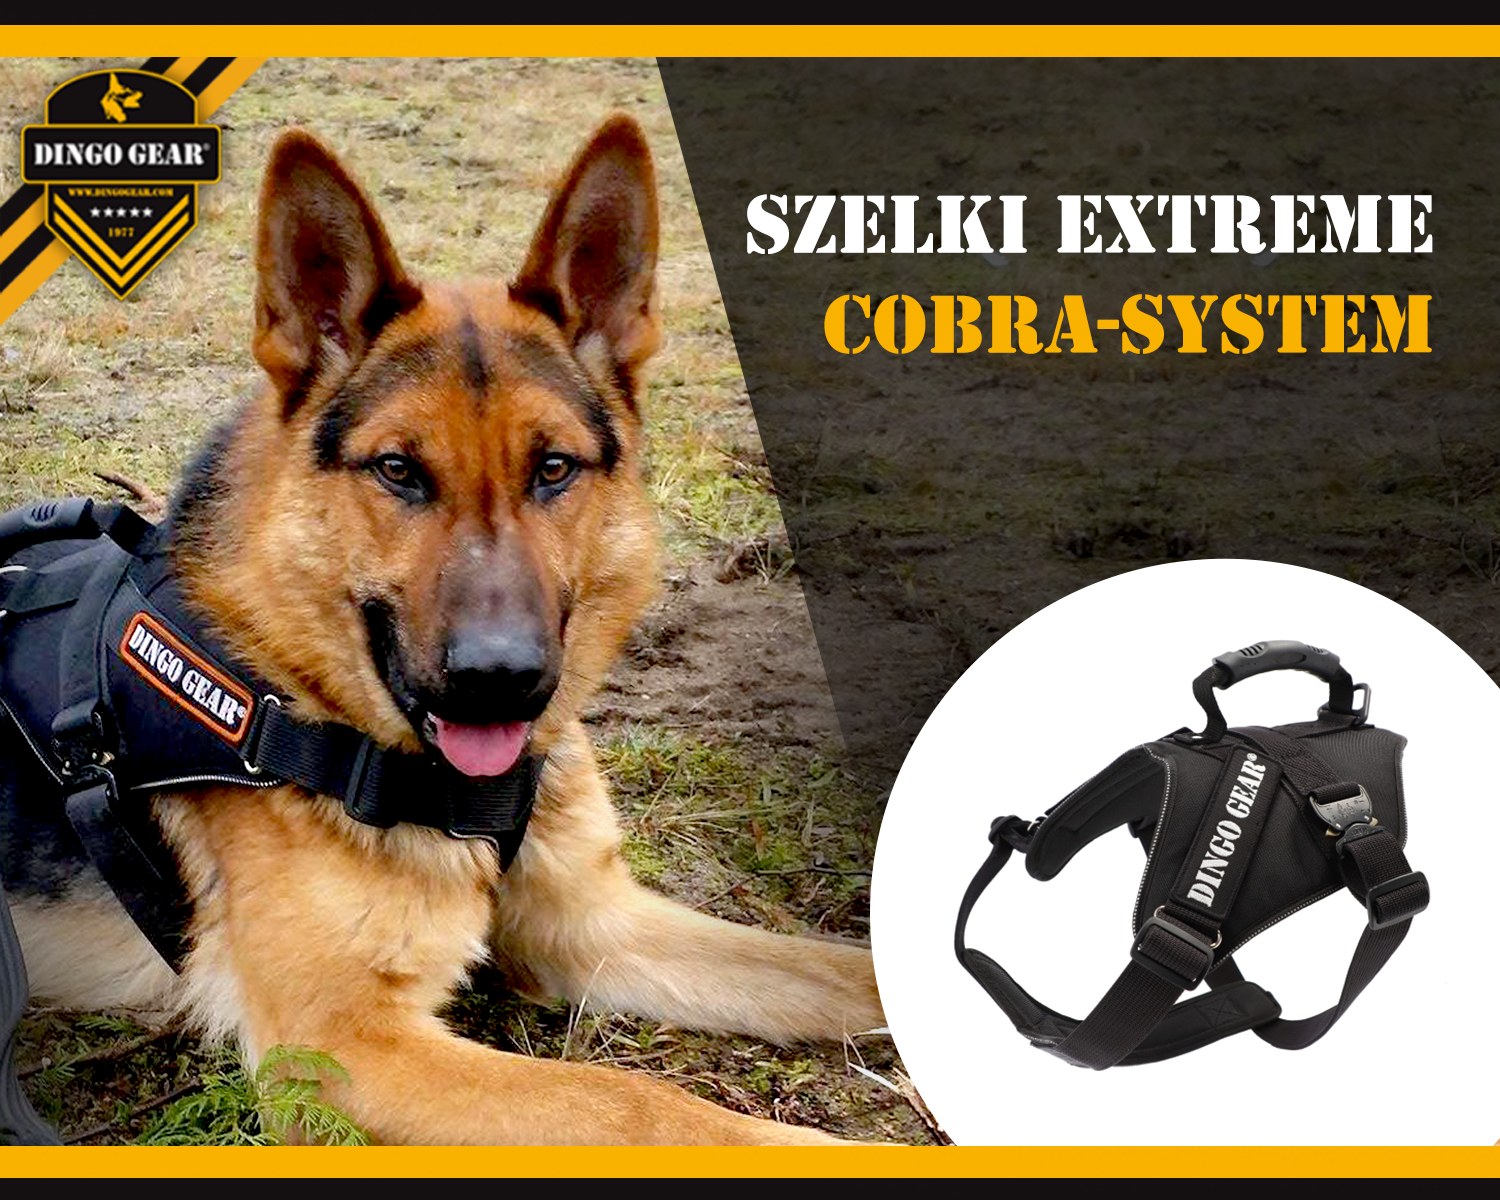 Zastosuj szelki Extreme Cobra System dla twojego psa